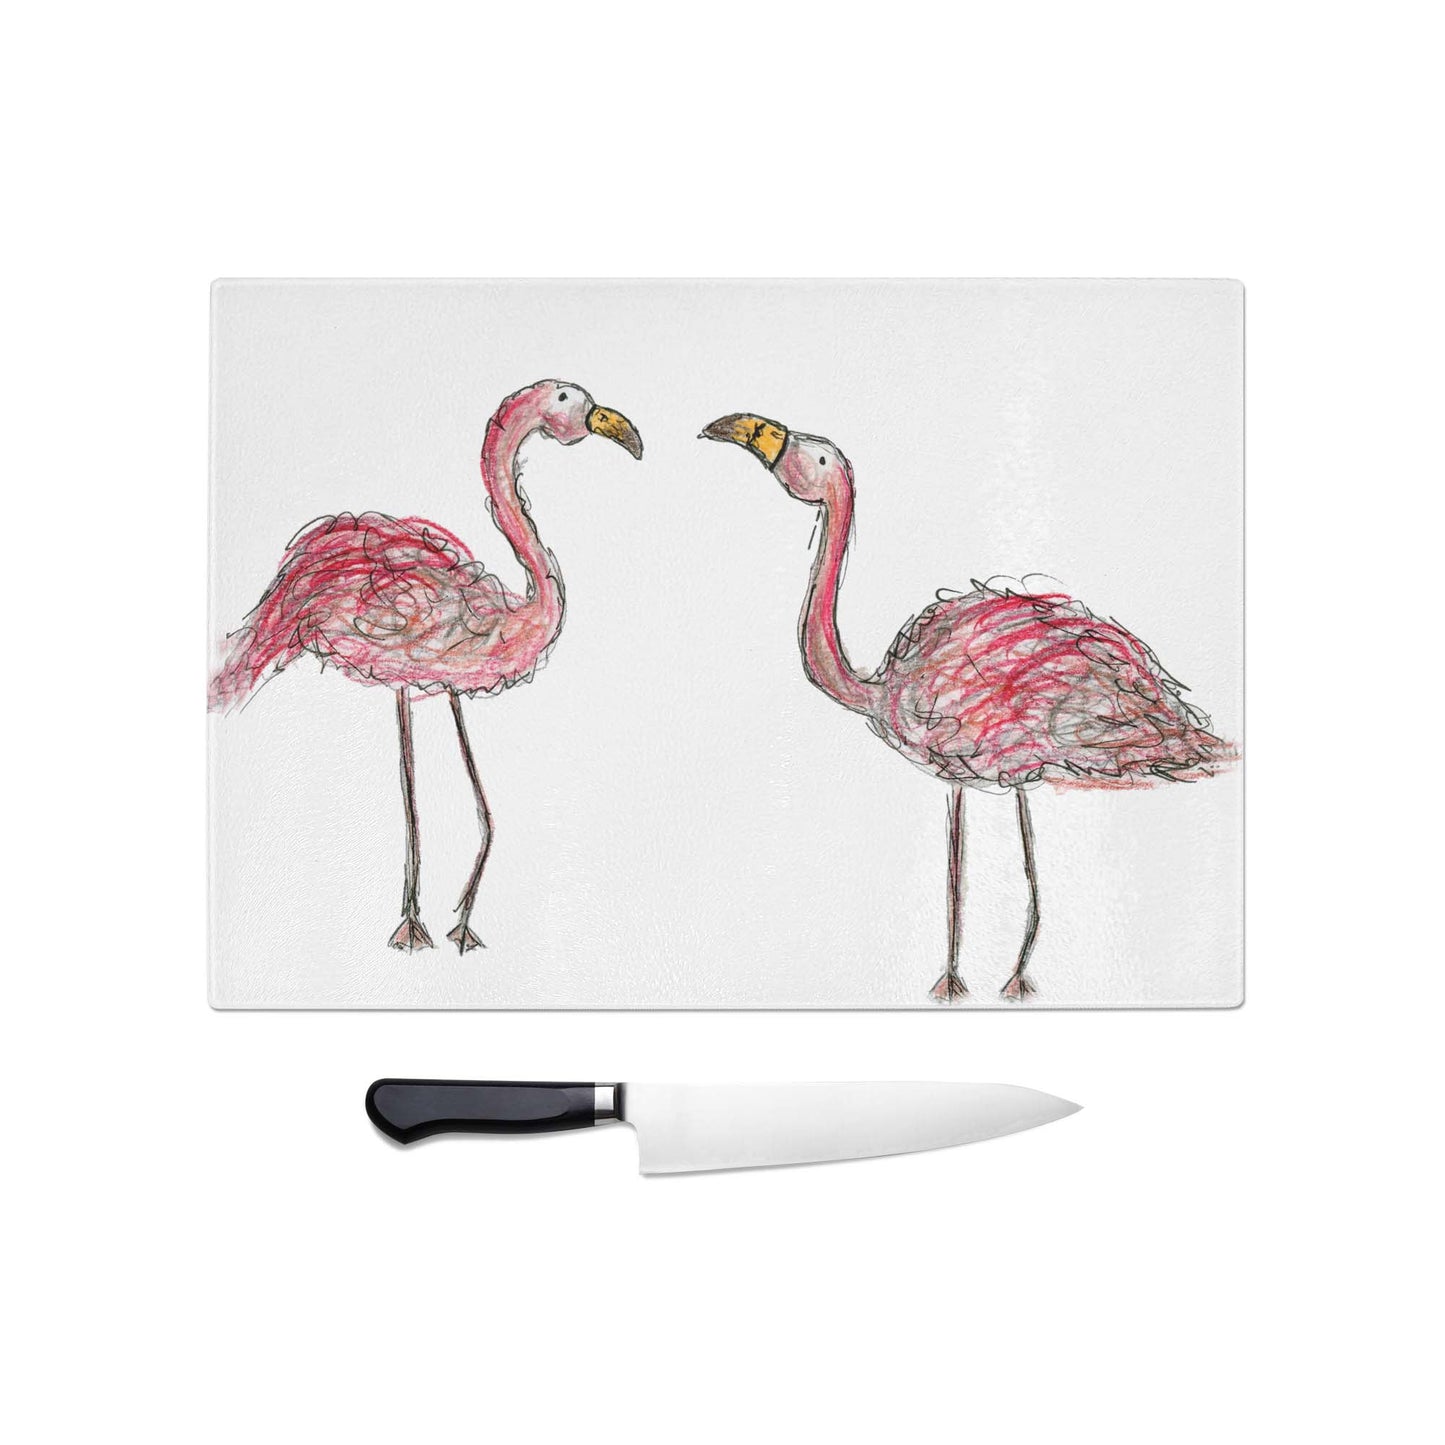 Flamingo chopping board / Worktop saver